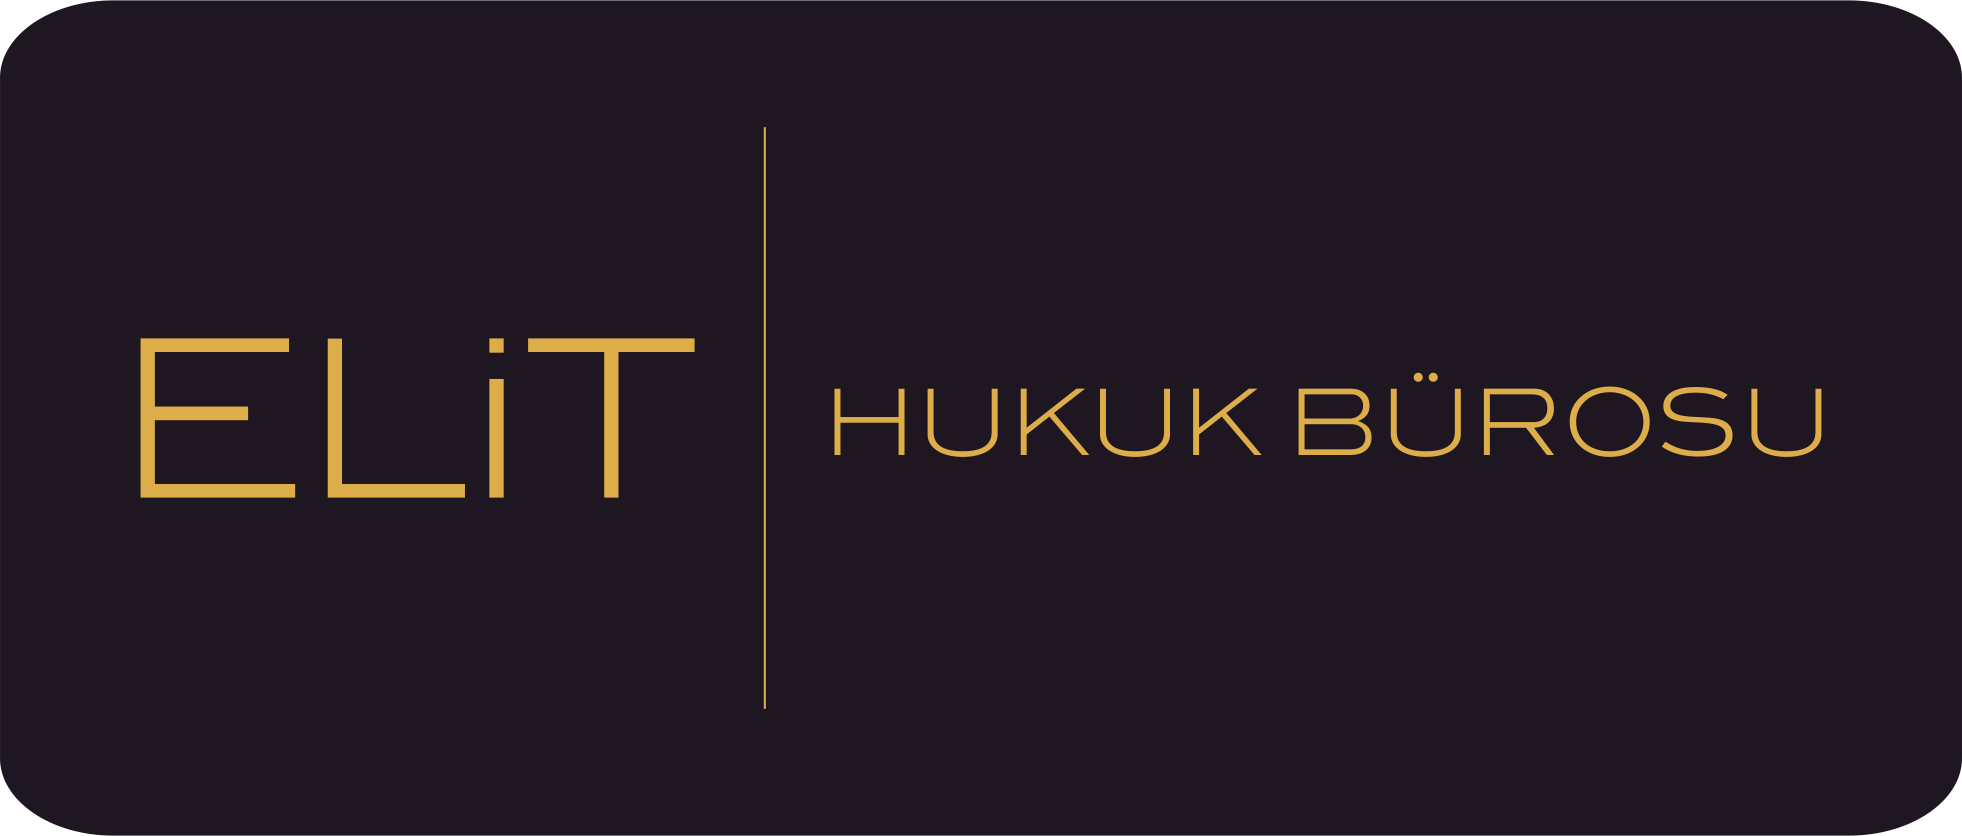 elit-hukuk-bu%cc%88rosu-png